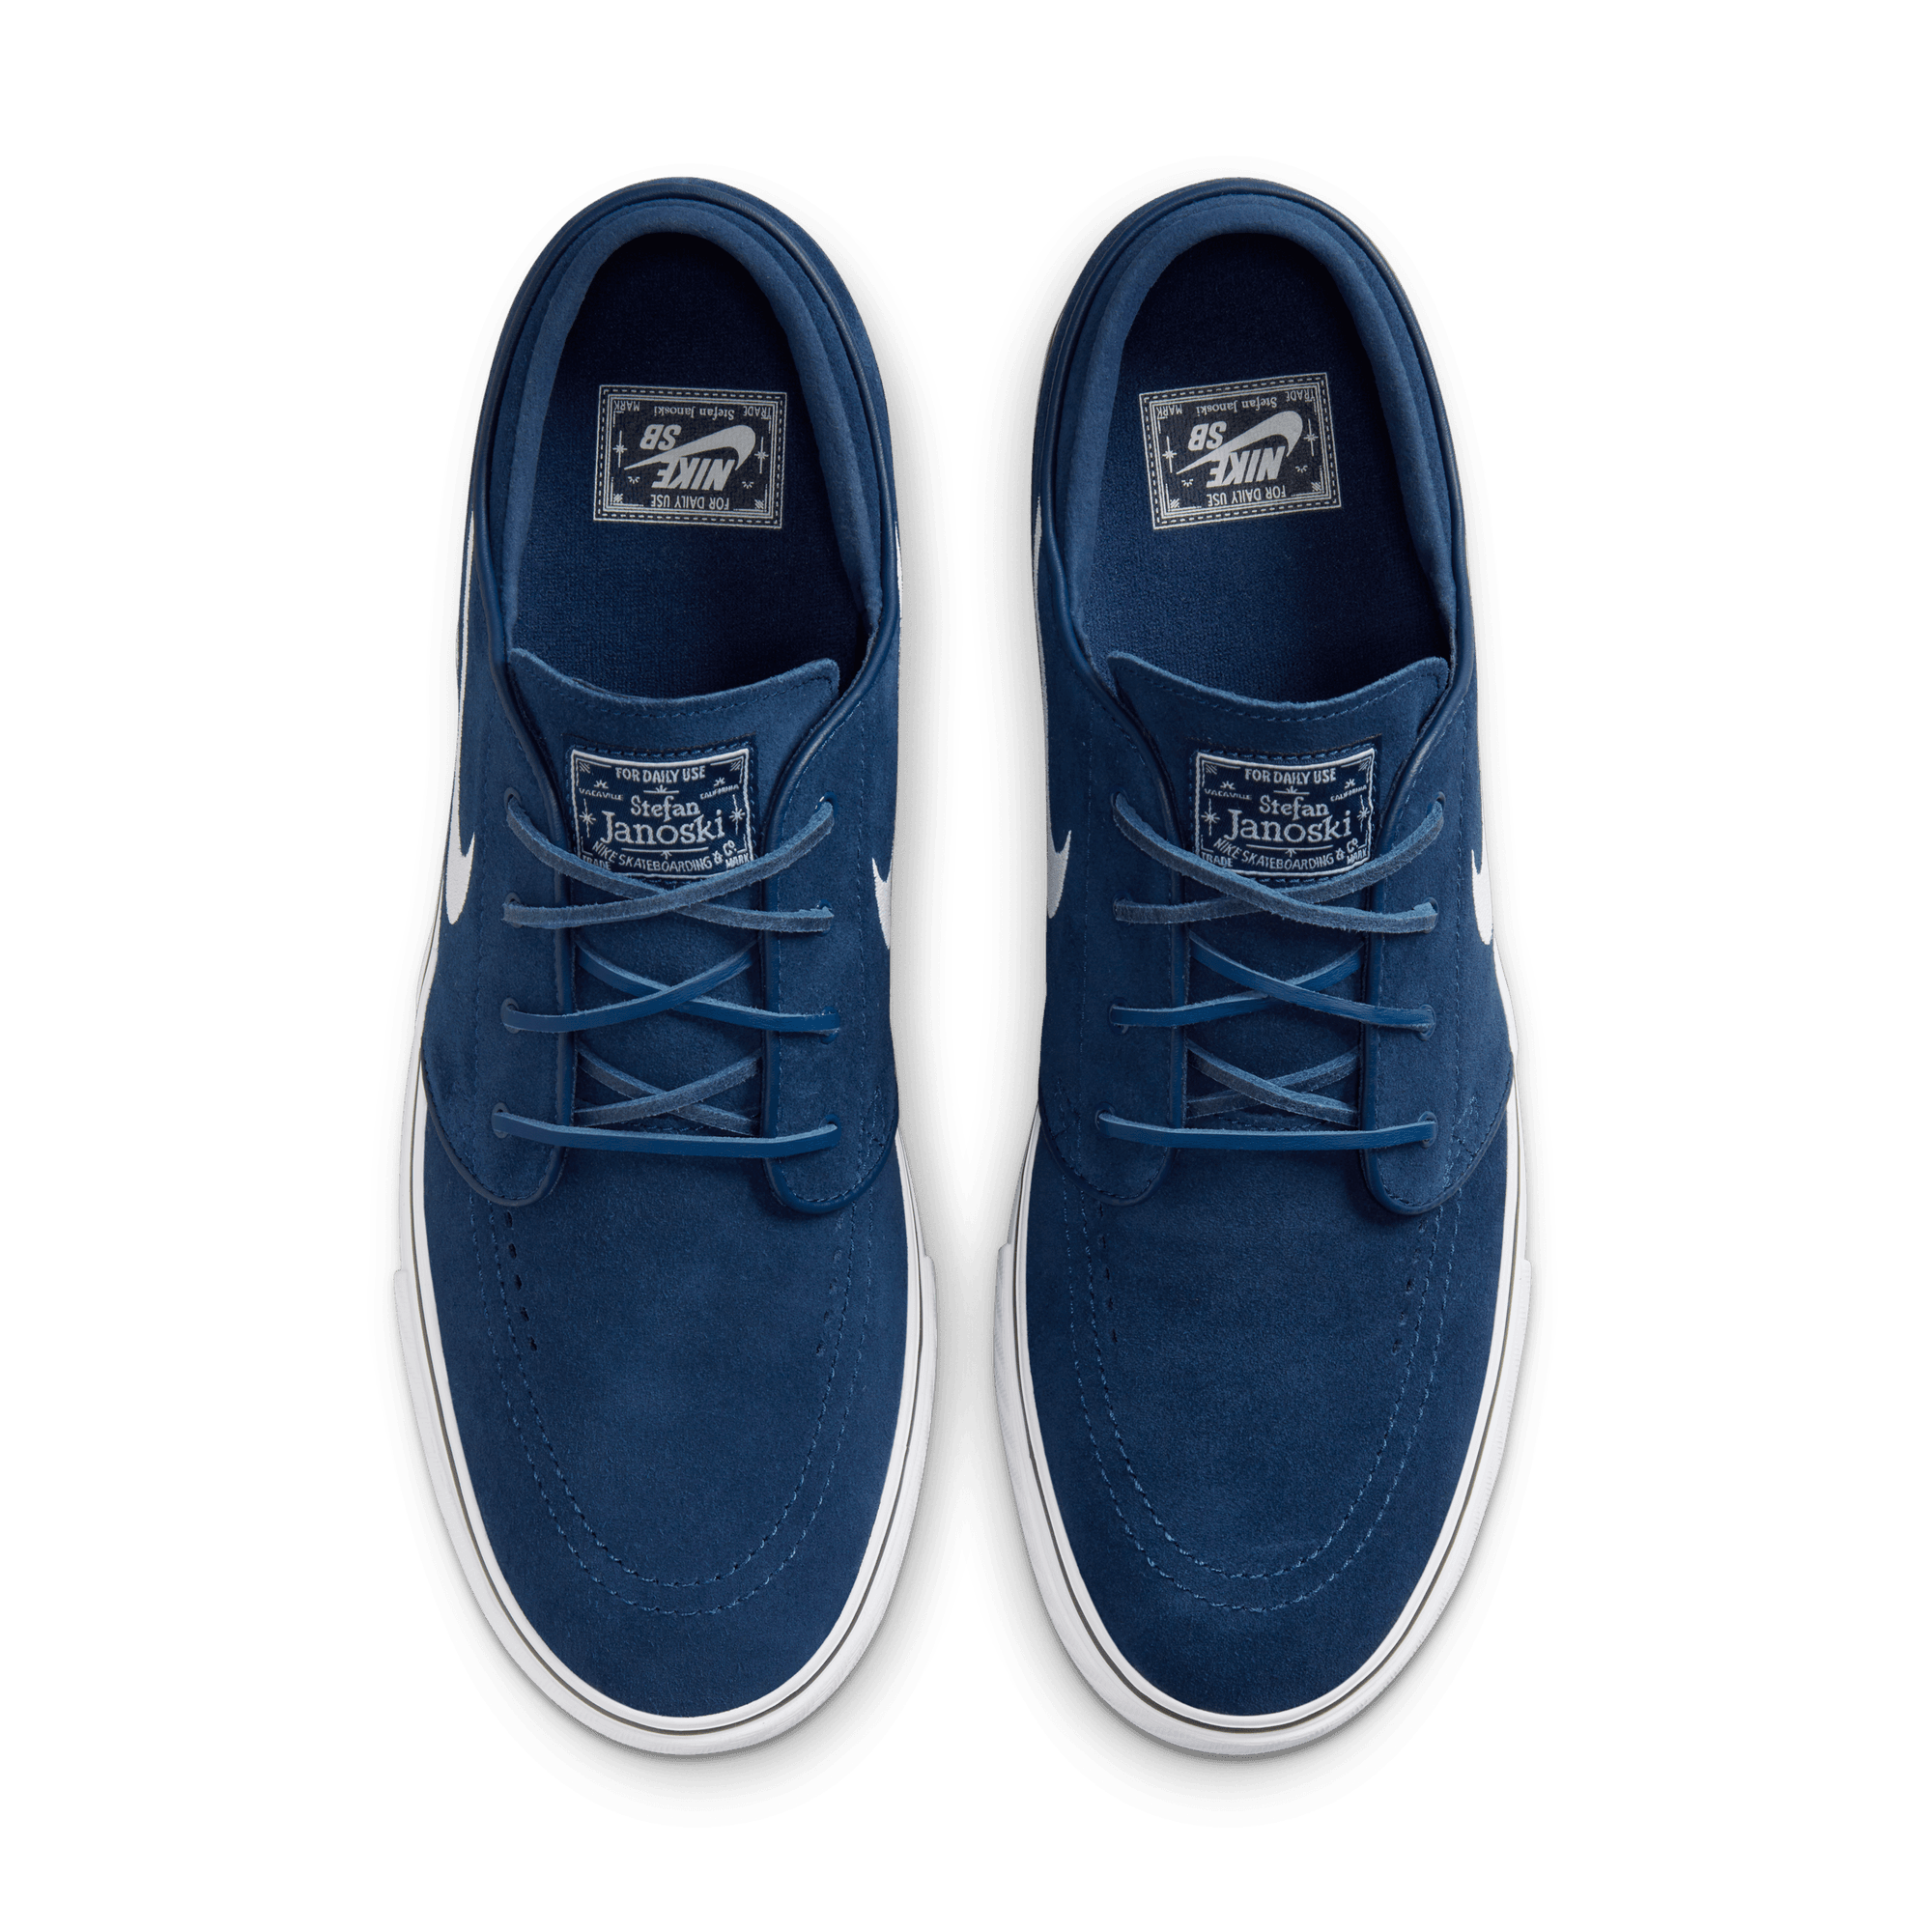 Navy/White Janoski+ Nike SB Skate Shoe Top